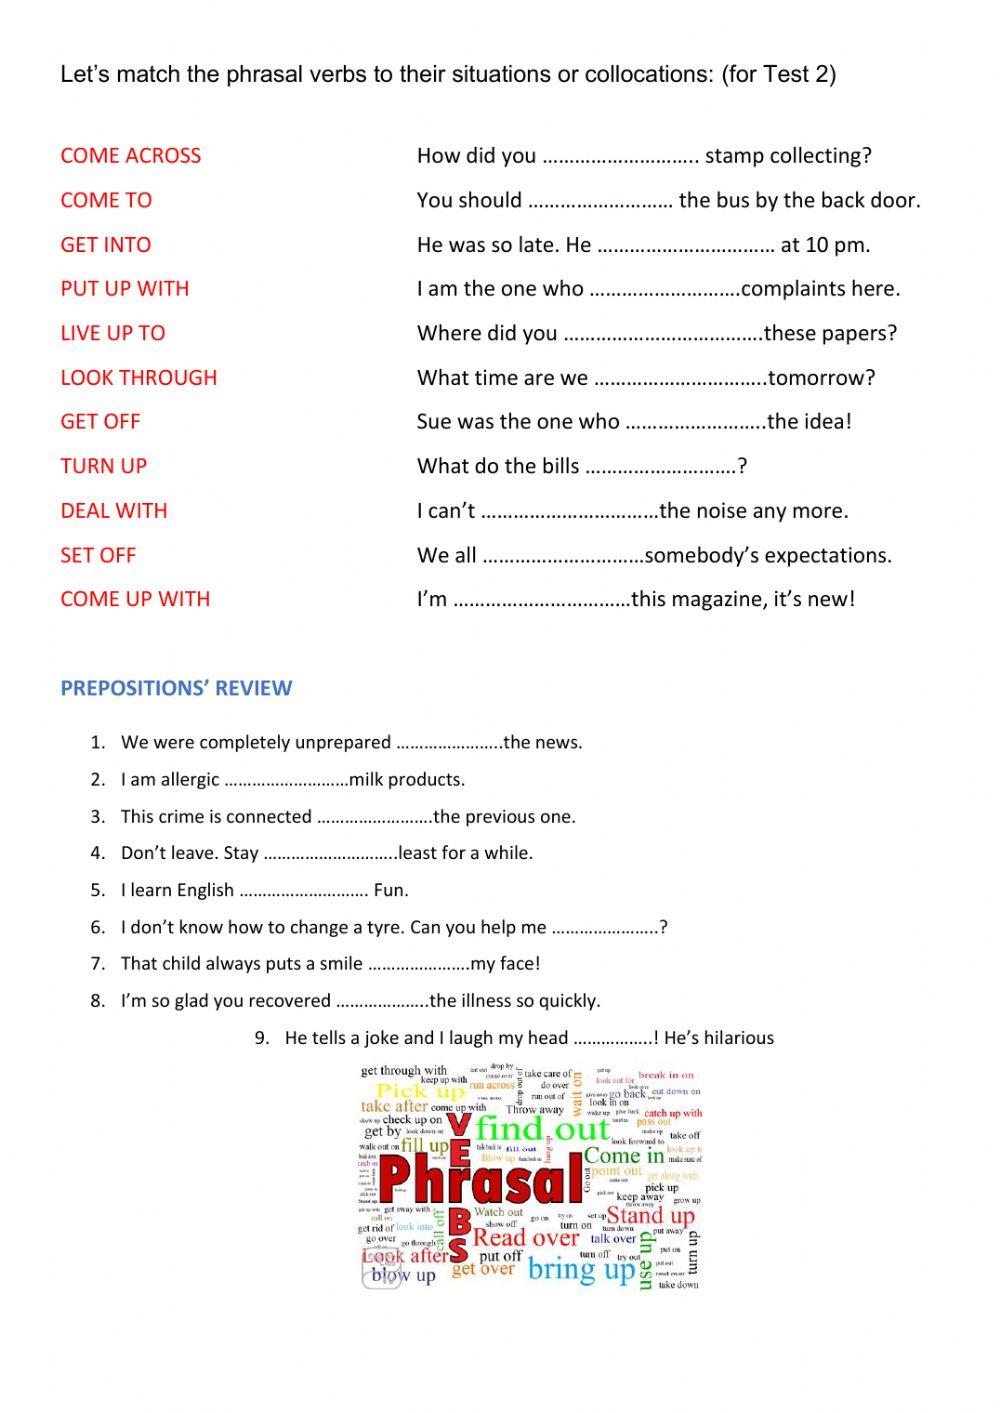 Phrasal verbs and prepositions